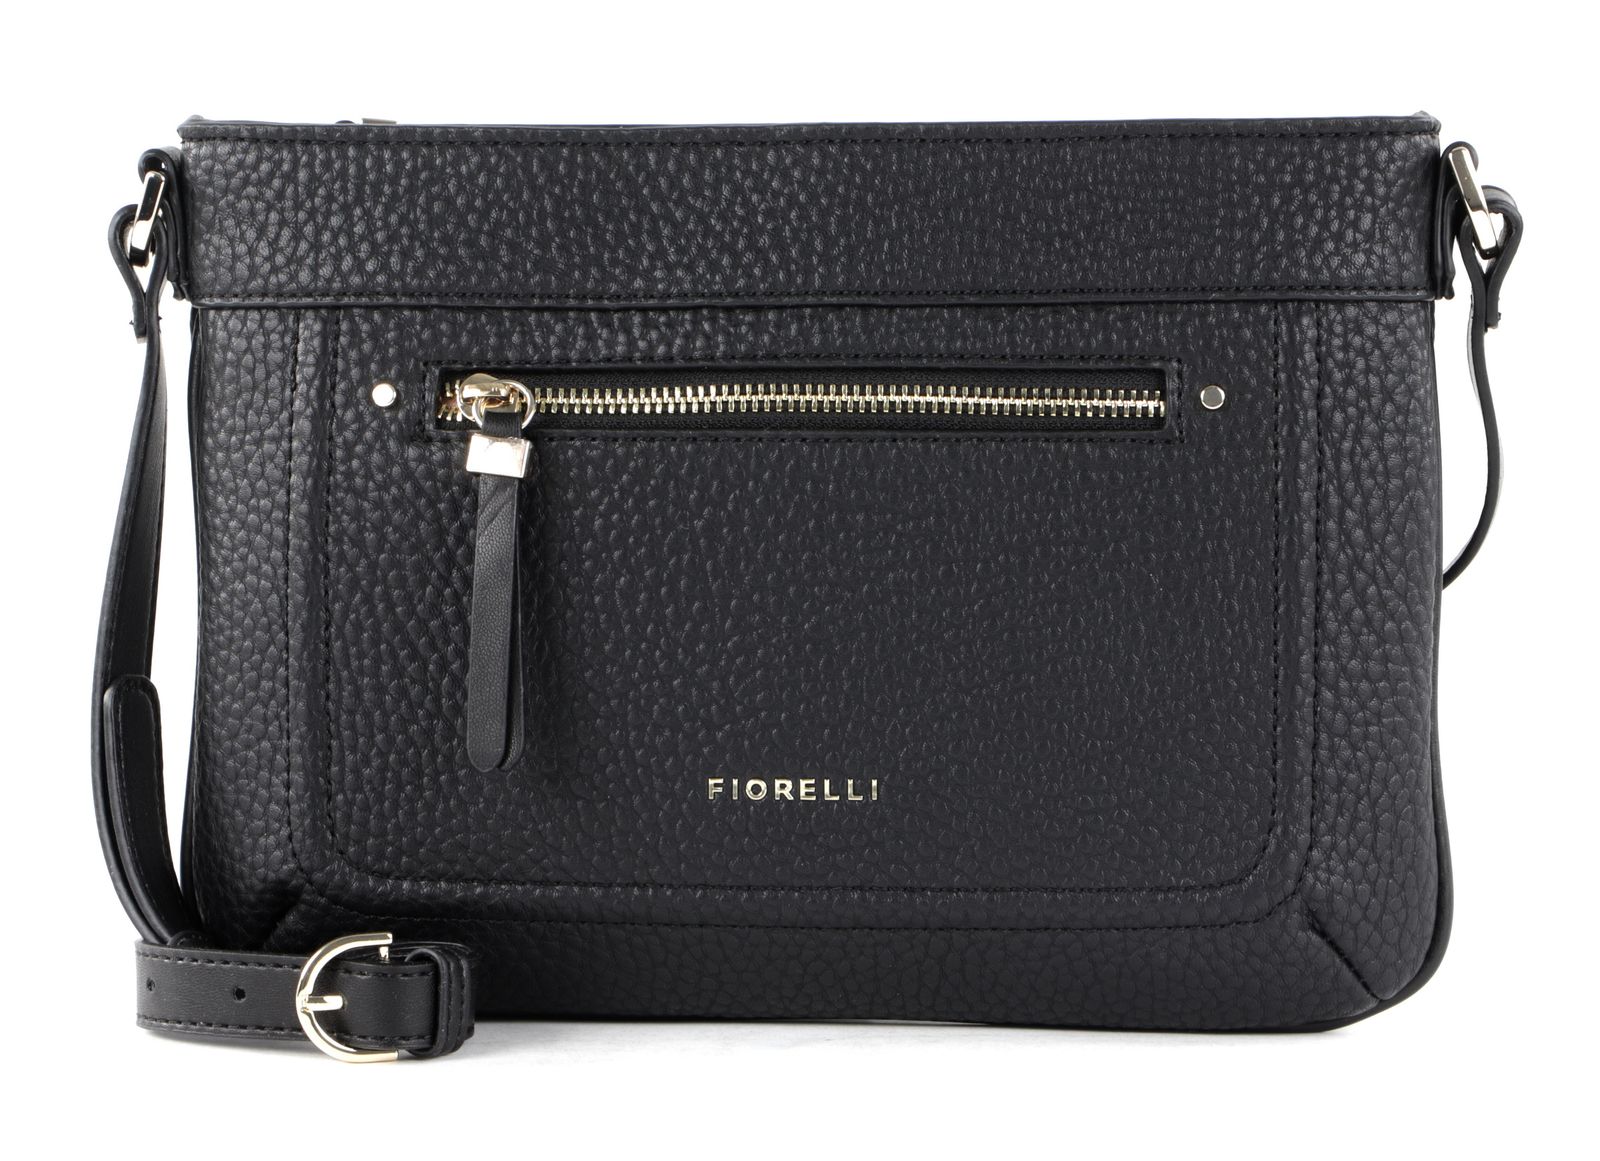 FIORELLI Rami Crossbody Bag Black | Buy bags, purses & accessories ...